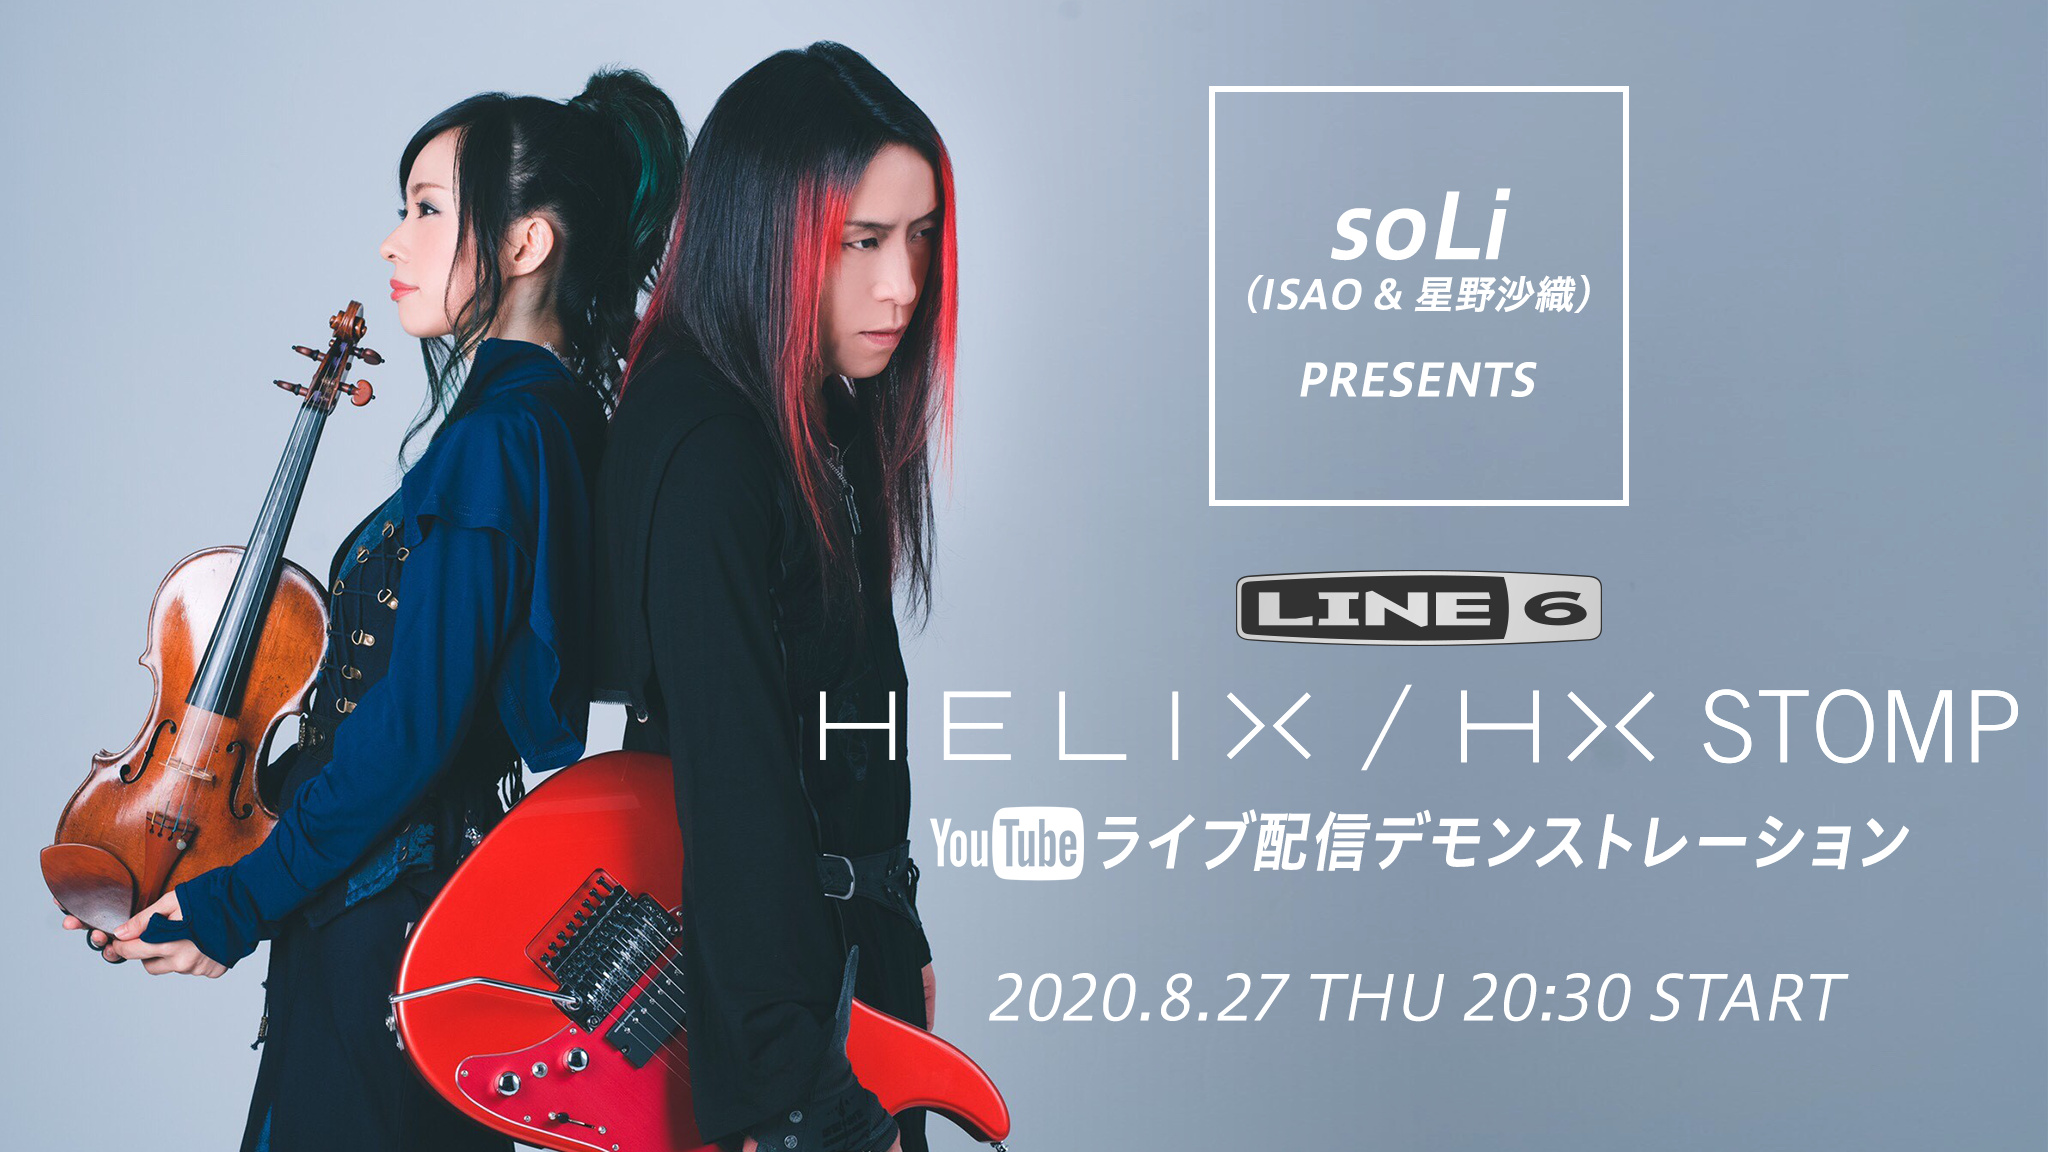 soLi（ISAO & 星野沙織） Helix/HX Stomp ライブ配信デモンストレーション